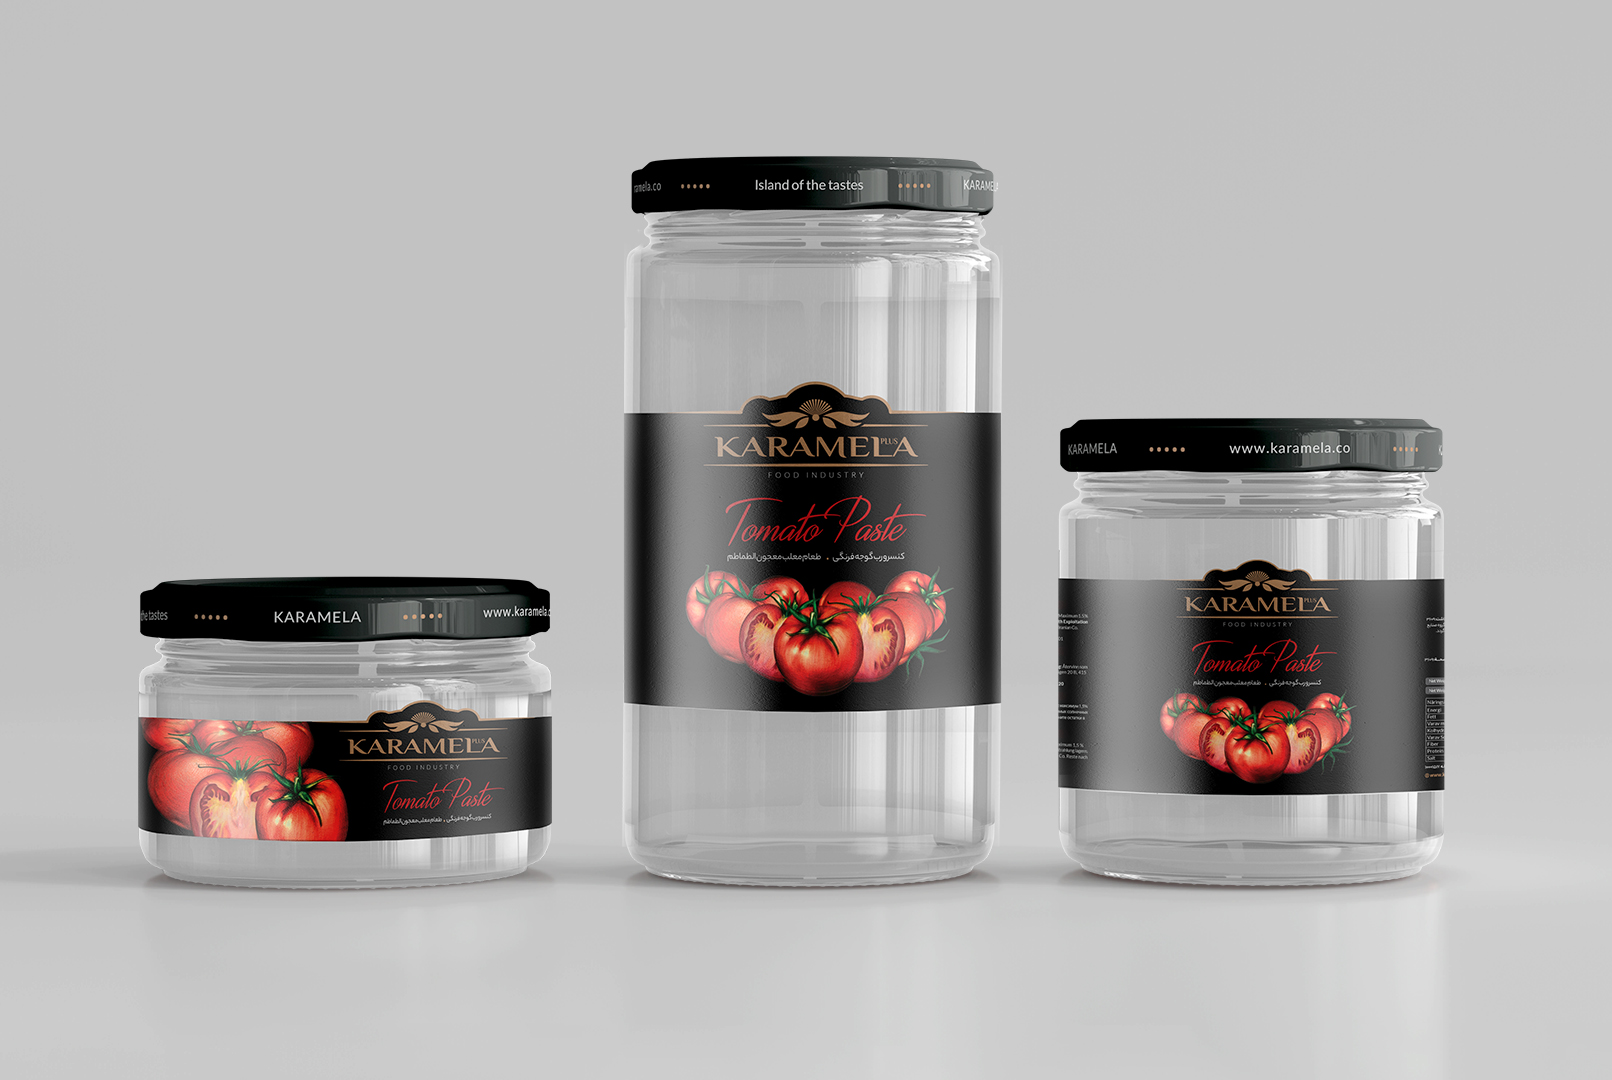 karamela brand tomato paste label design